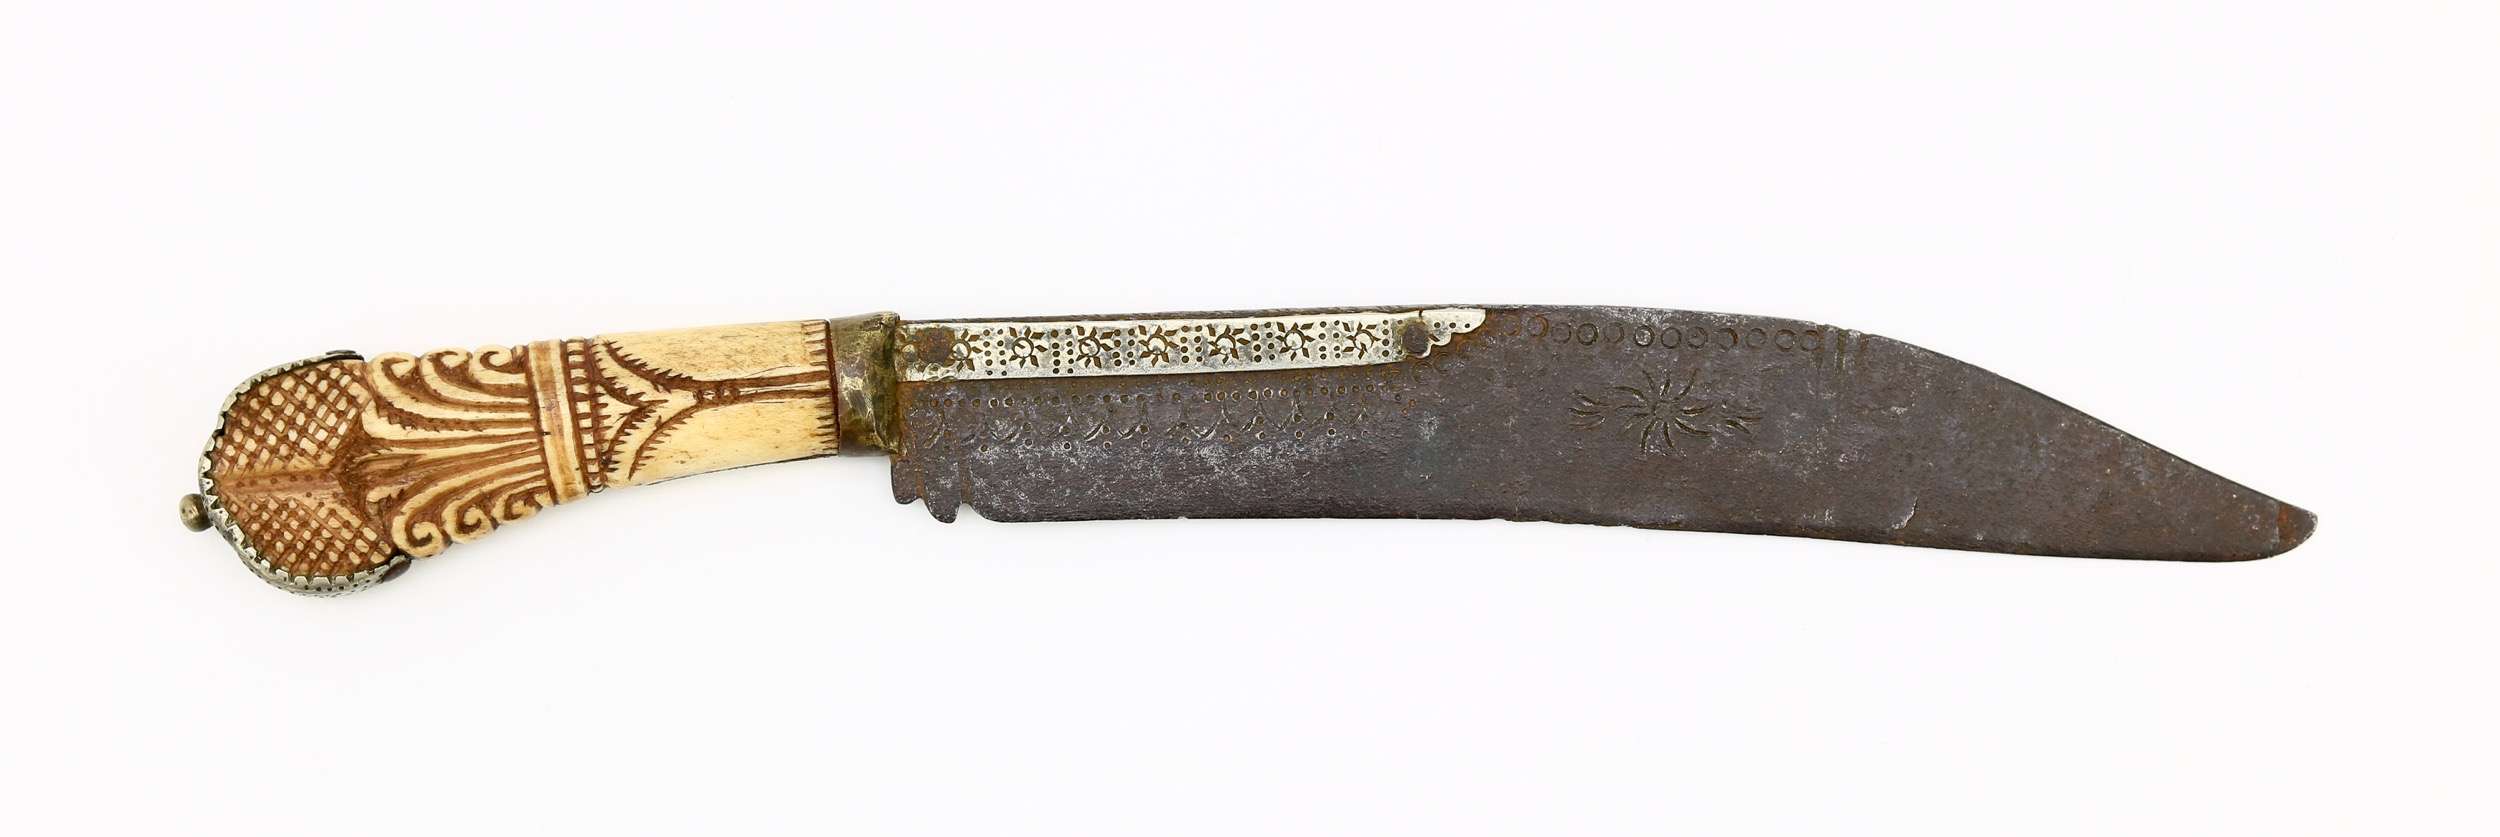 Sinhalese knife